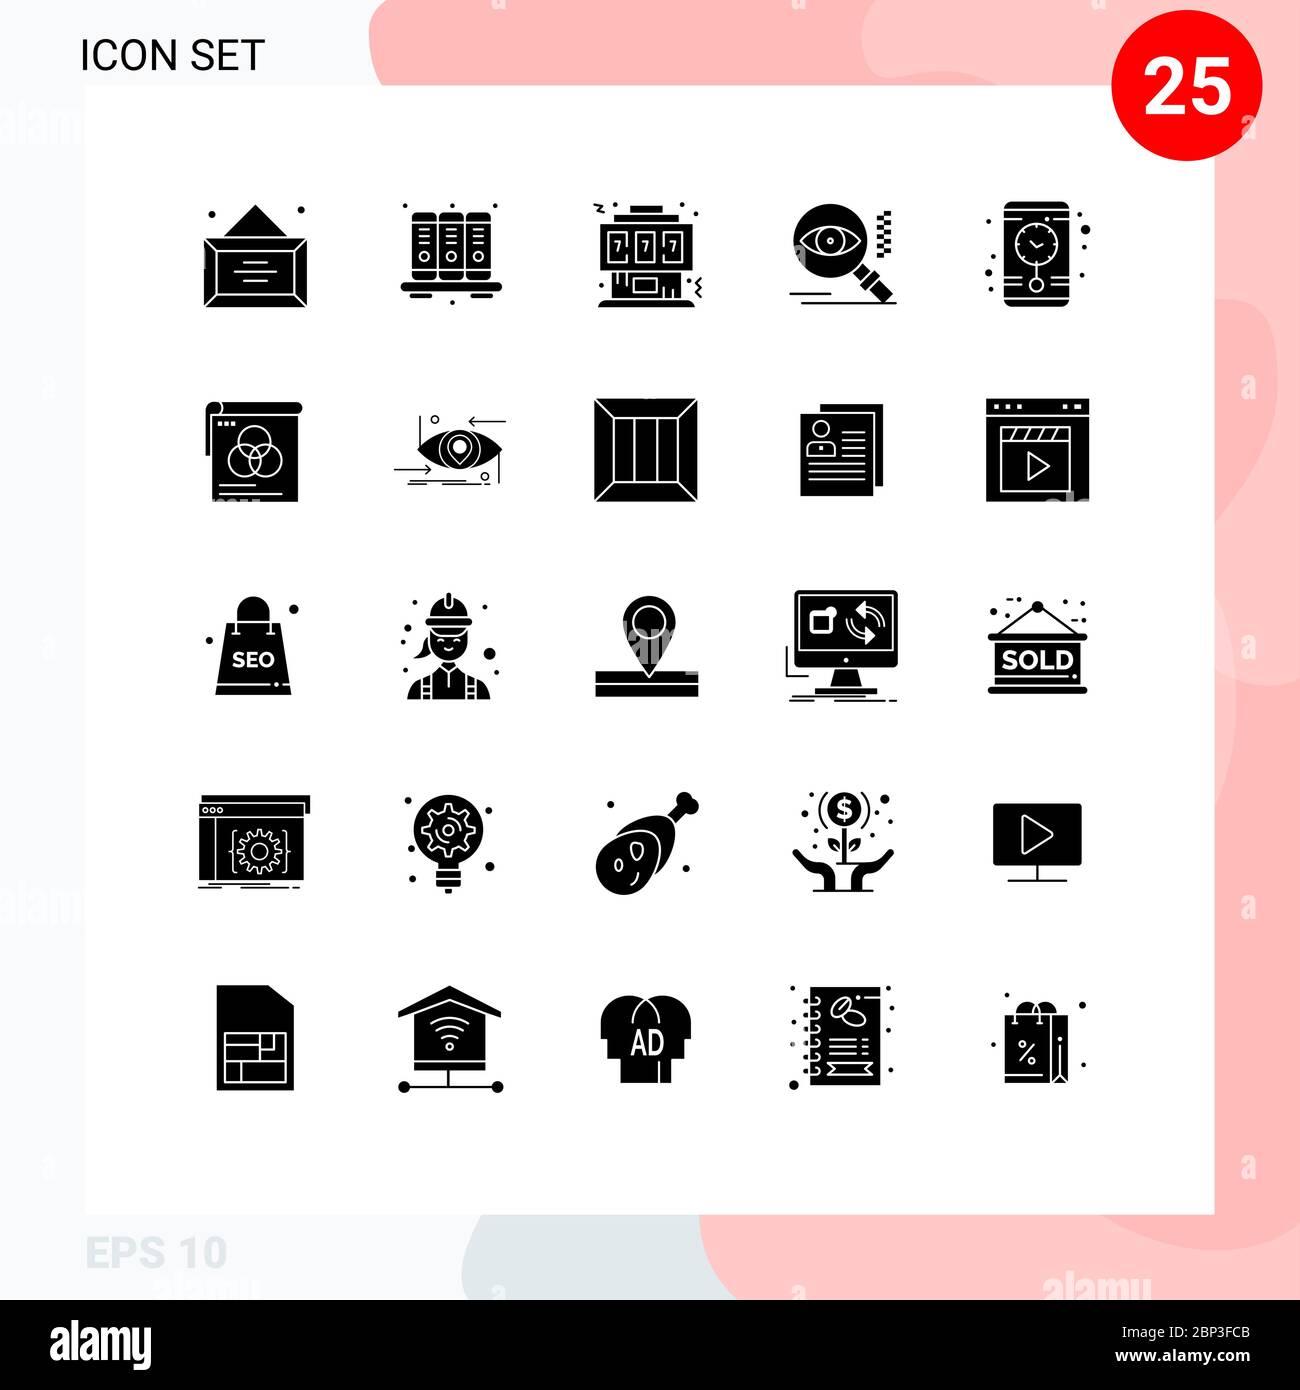 25 icônes créatives signes et symboles modernes de l'horloge, de la vue, du jeu, de la recherche, de la console modifiable Vector Design Elements Illustration de Vecteur